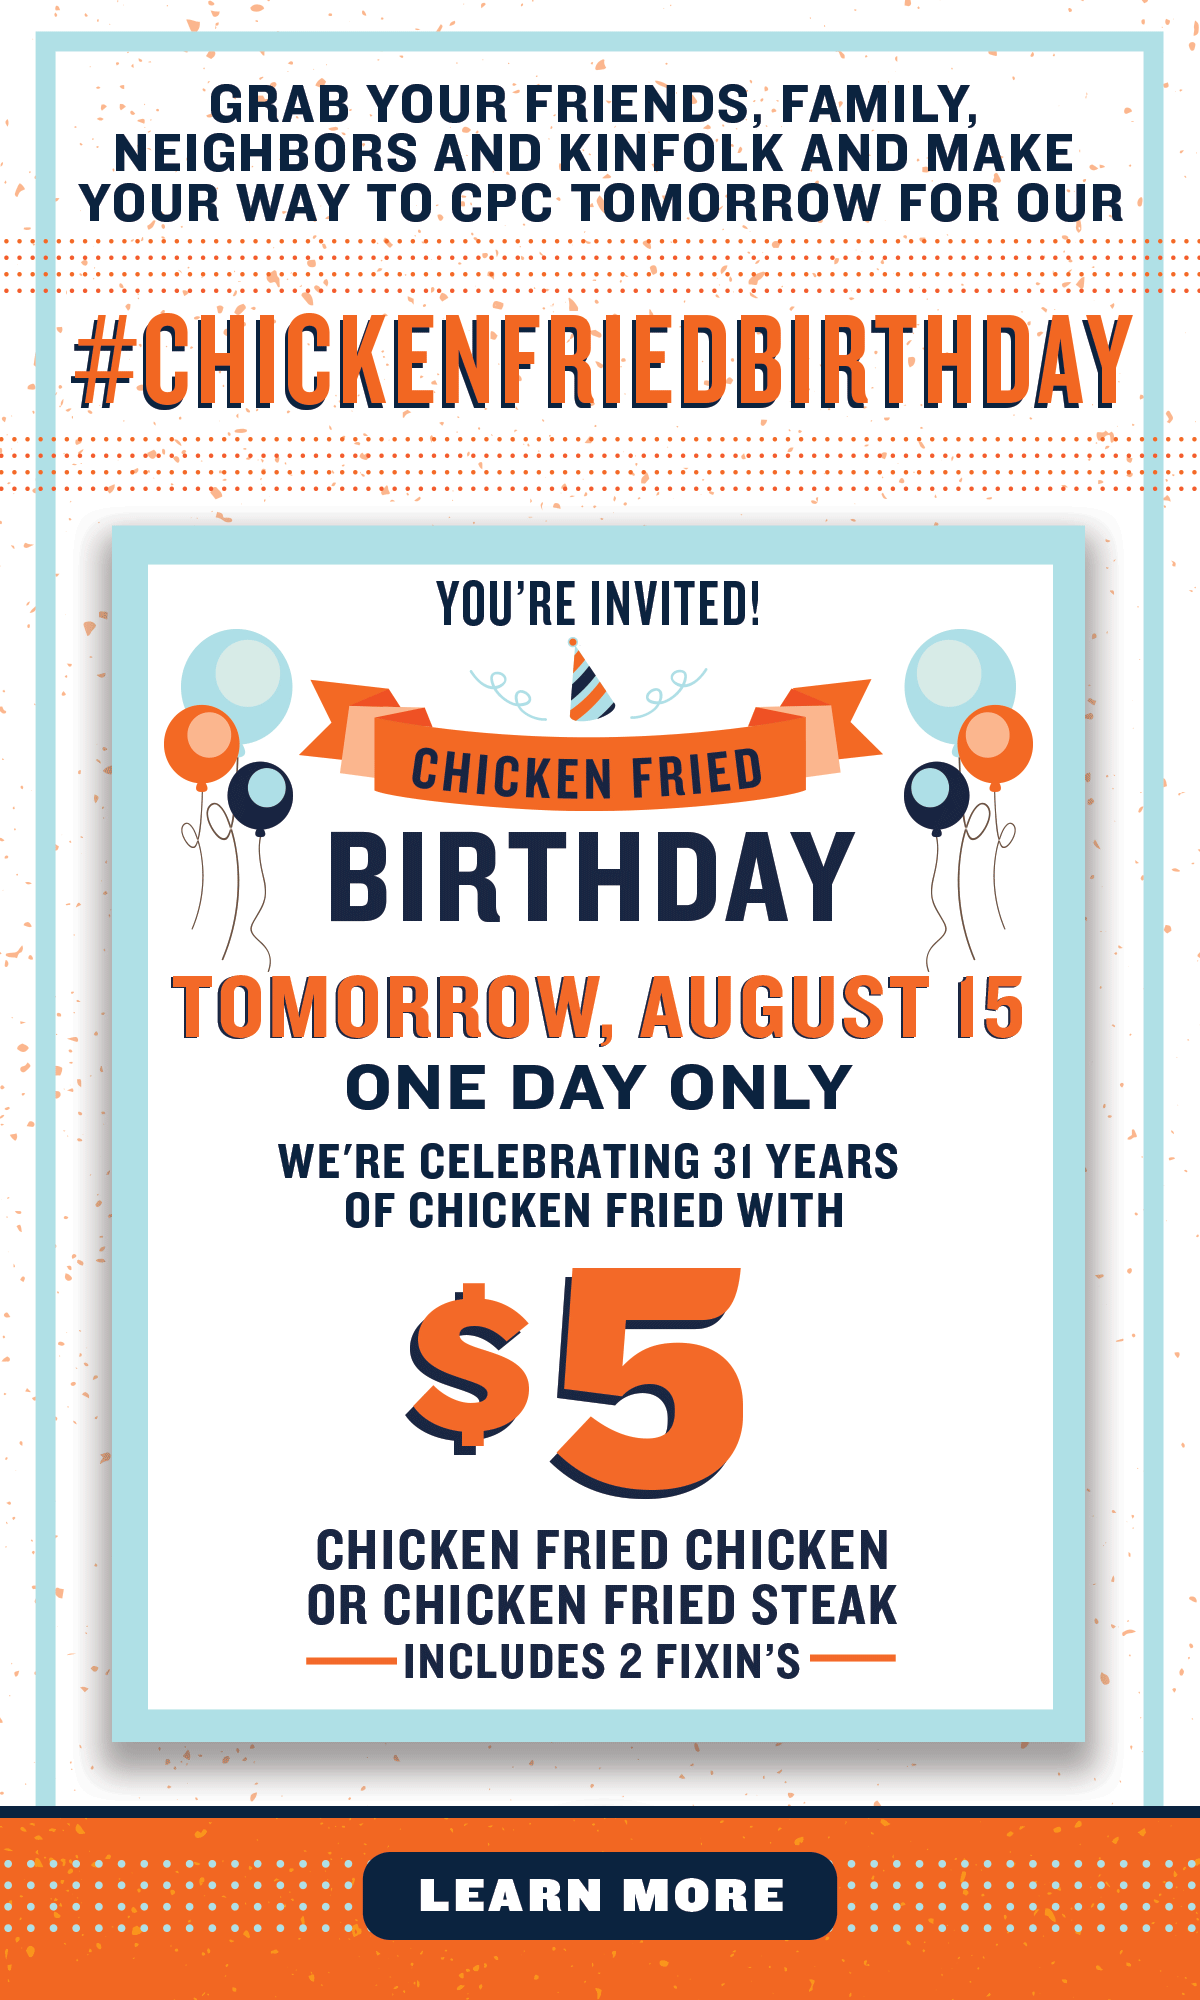 $5 Chicken Fried Steak and $5 Chicken Fried Chicken on Saturday, August 15th 